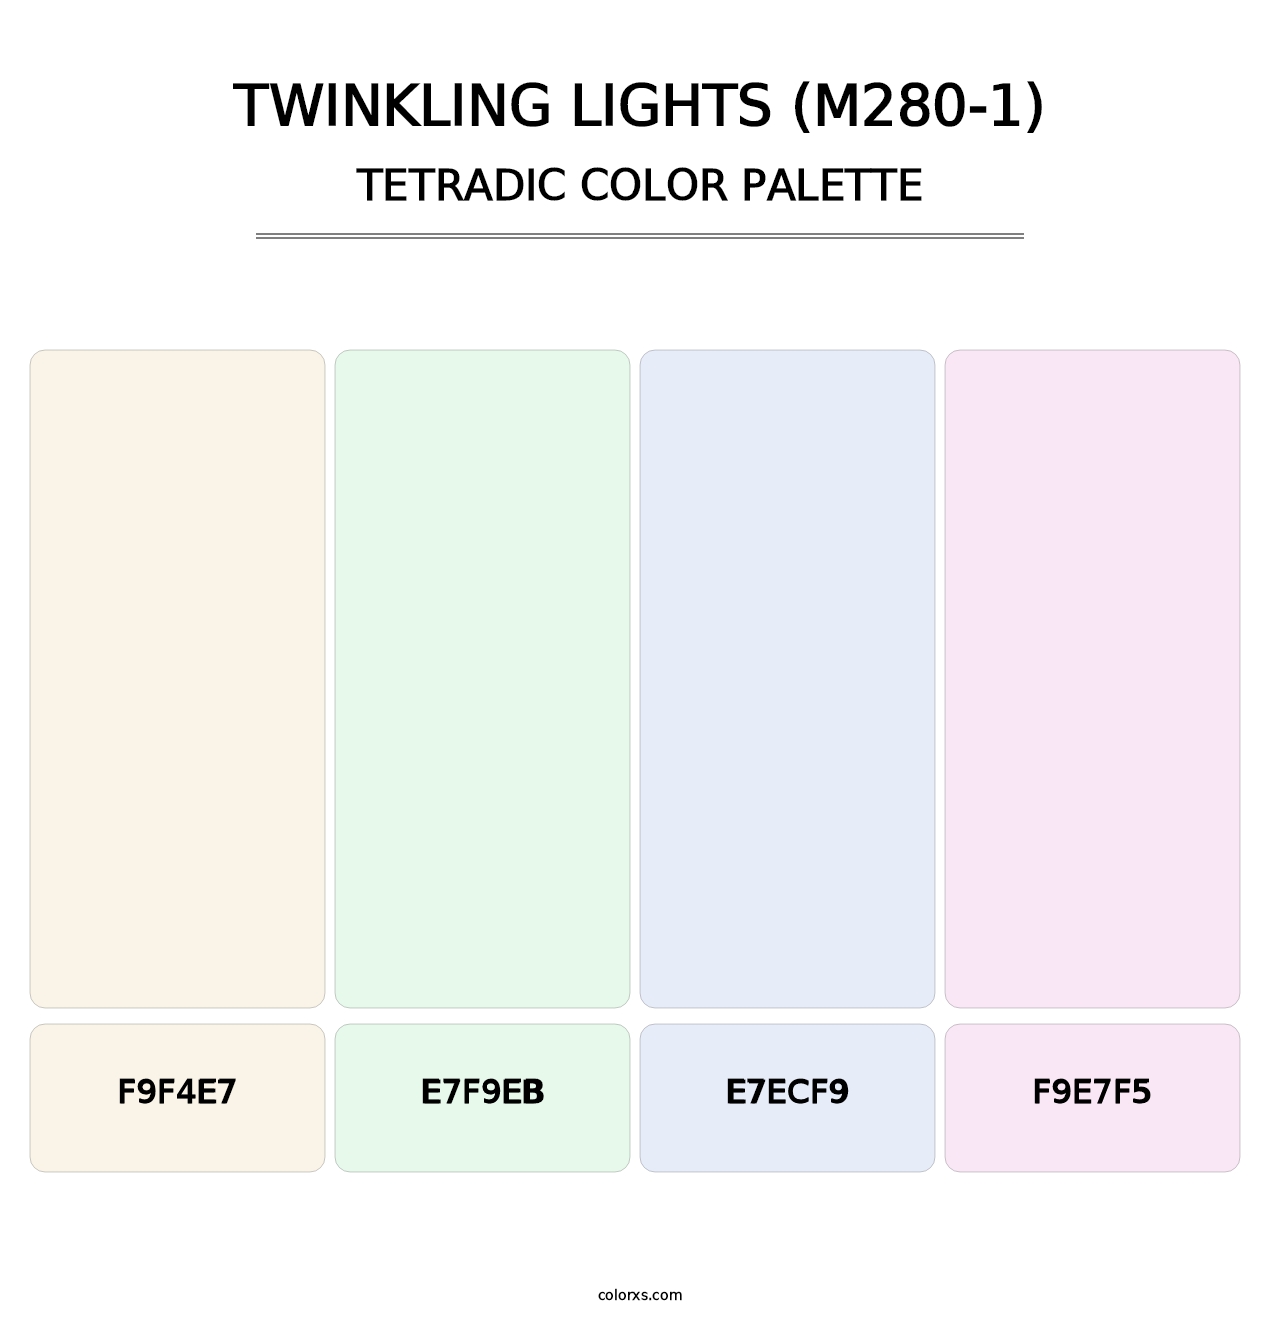 Twinkling Lights (M280-1) - Tetradic Color Palette